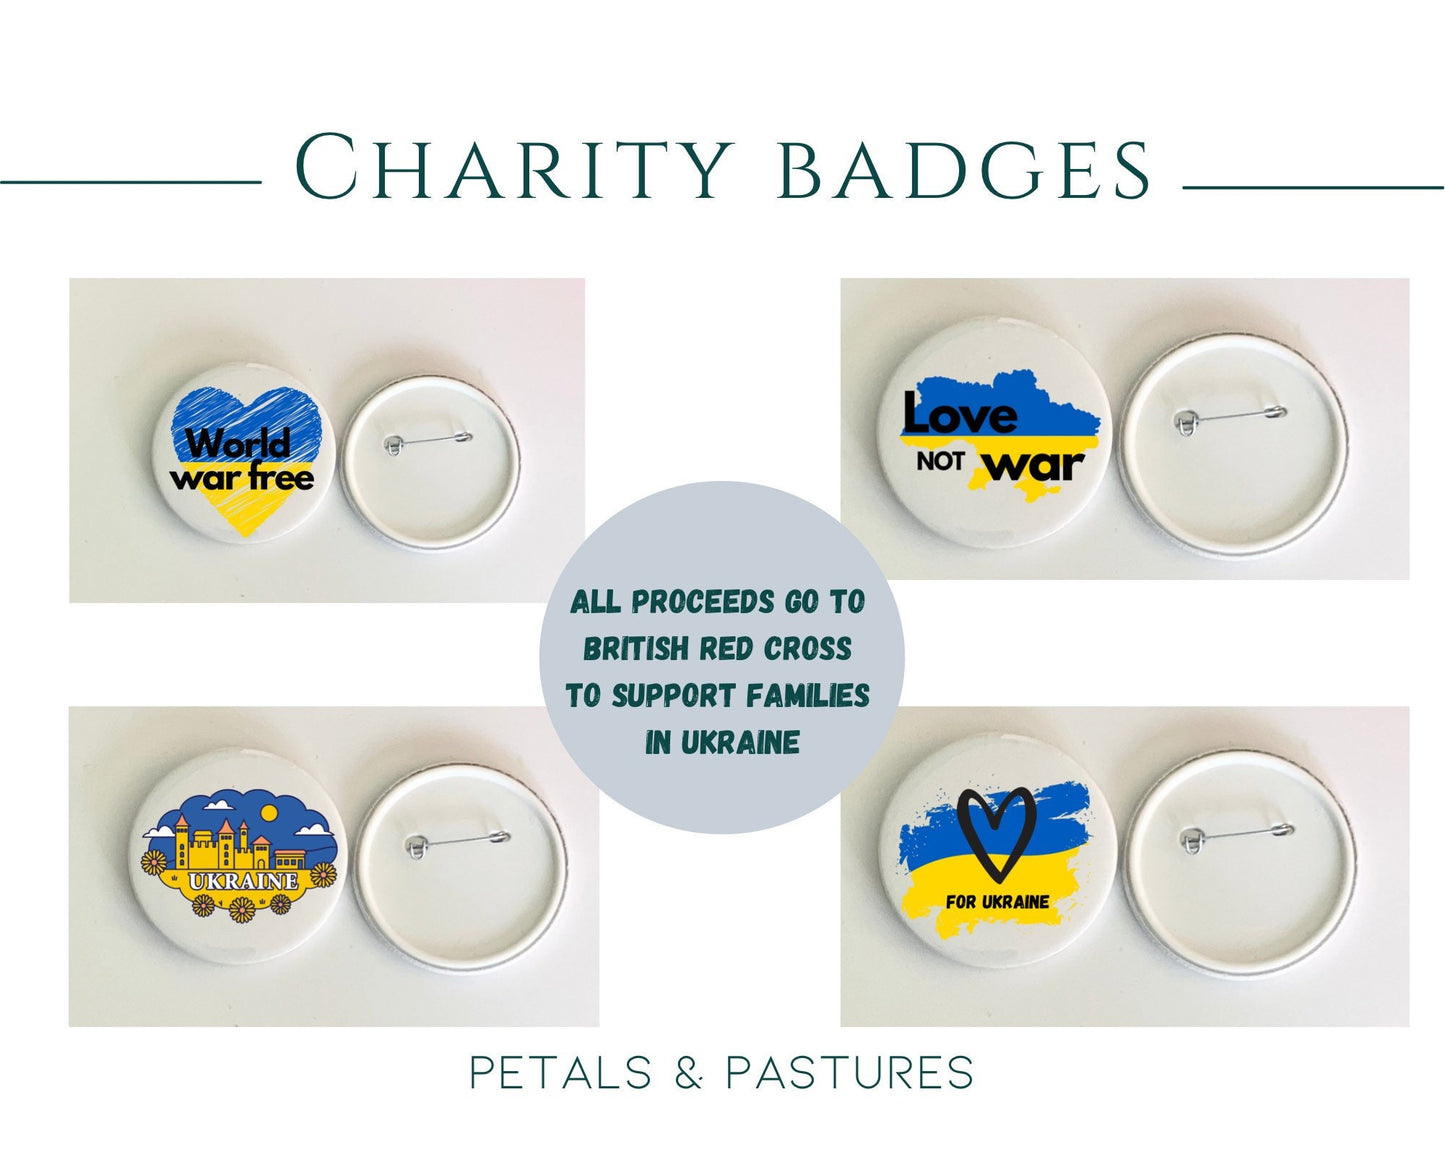 Love for Ukraine badge, stand with ukraine badges, world war free, donating profits to British Red Cross charity